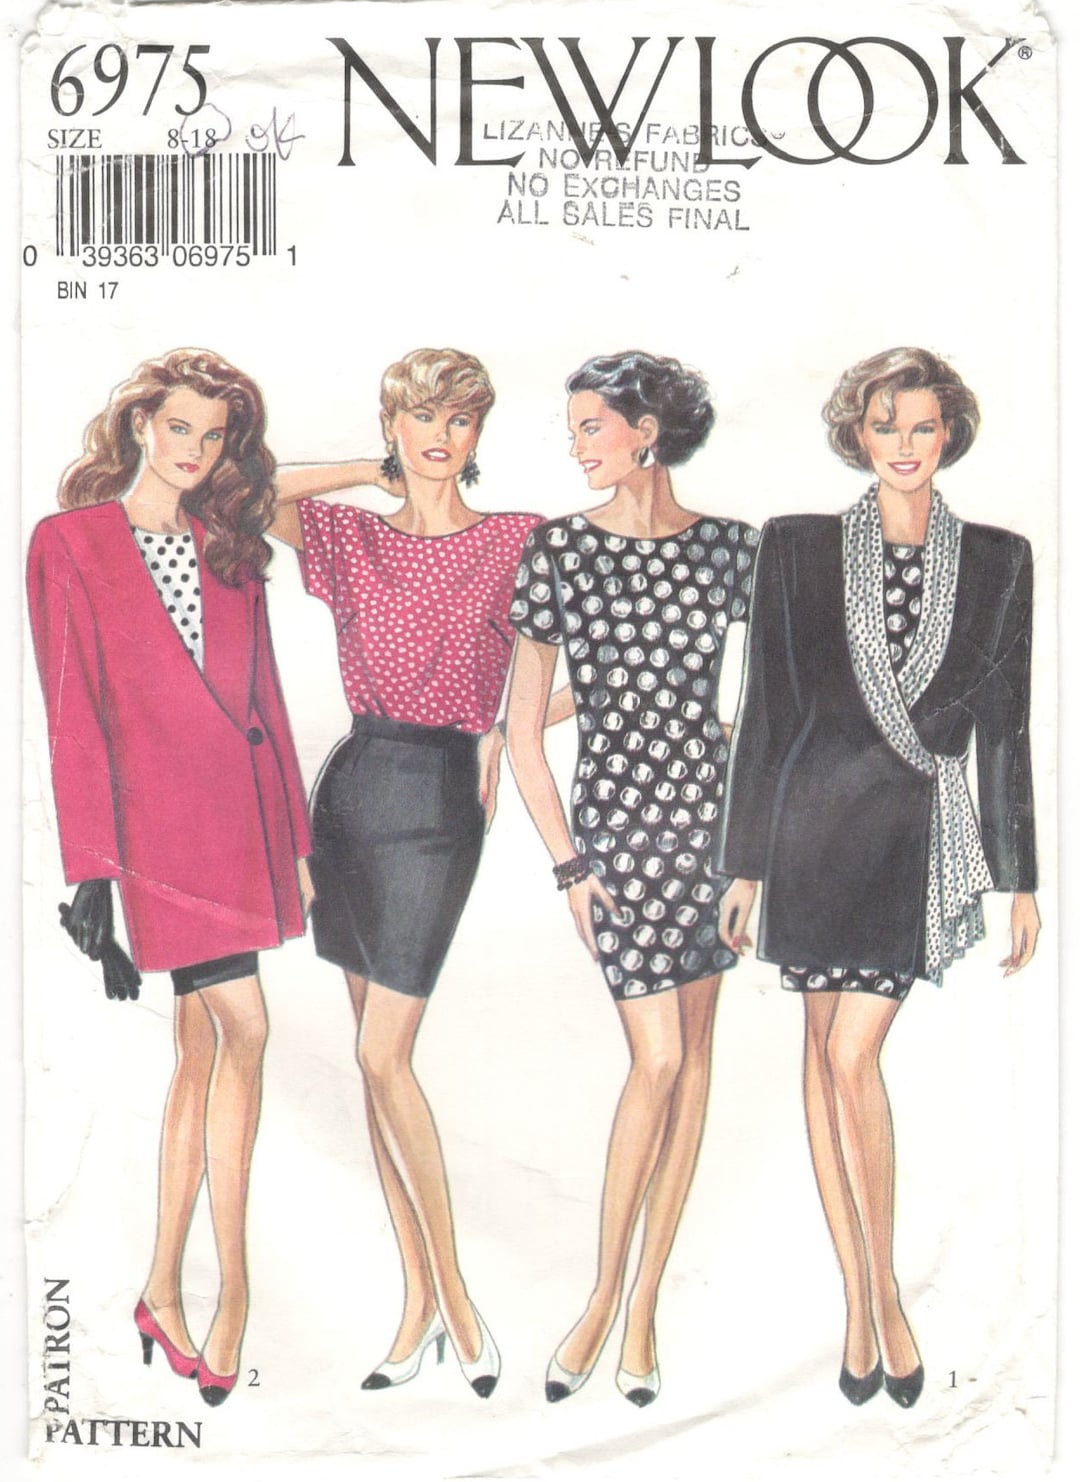 Newlook 6975 Sewing Pattern Misses' Dress Jacket Skirt - Etsy